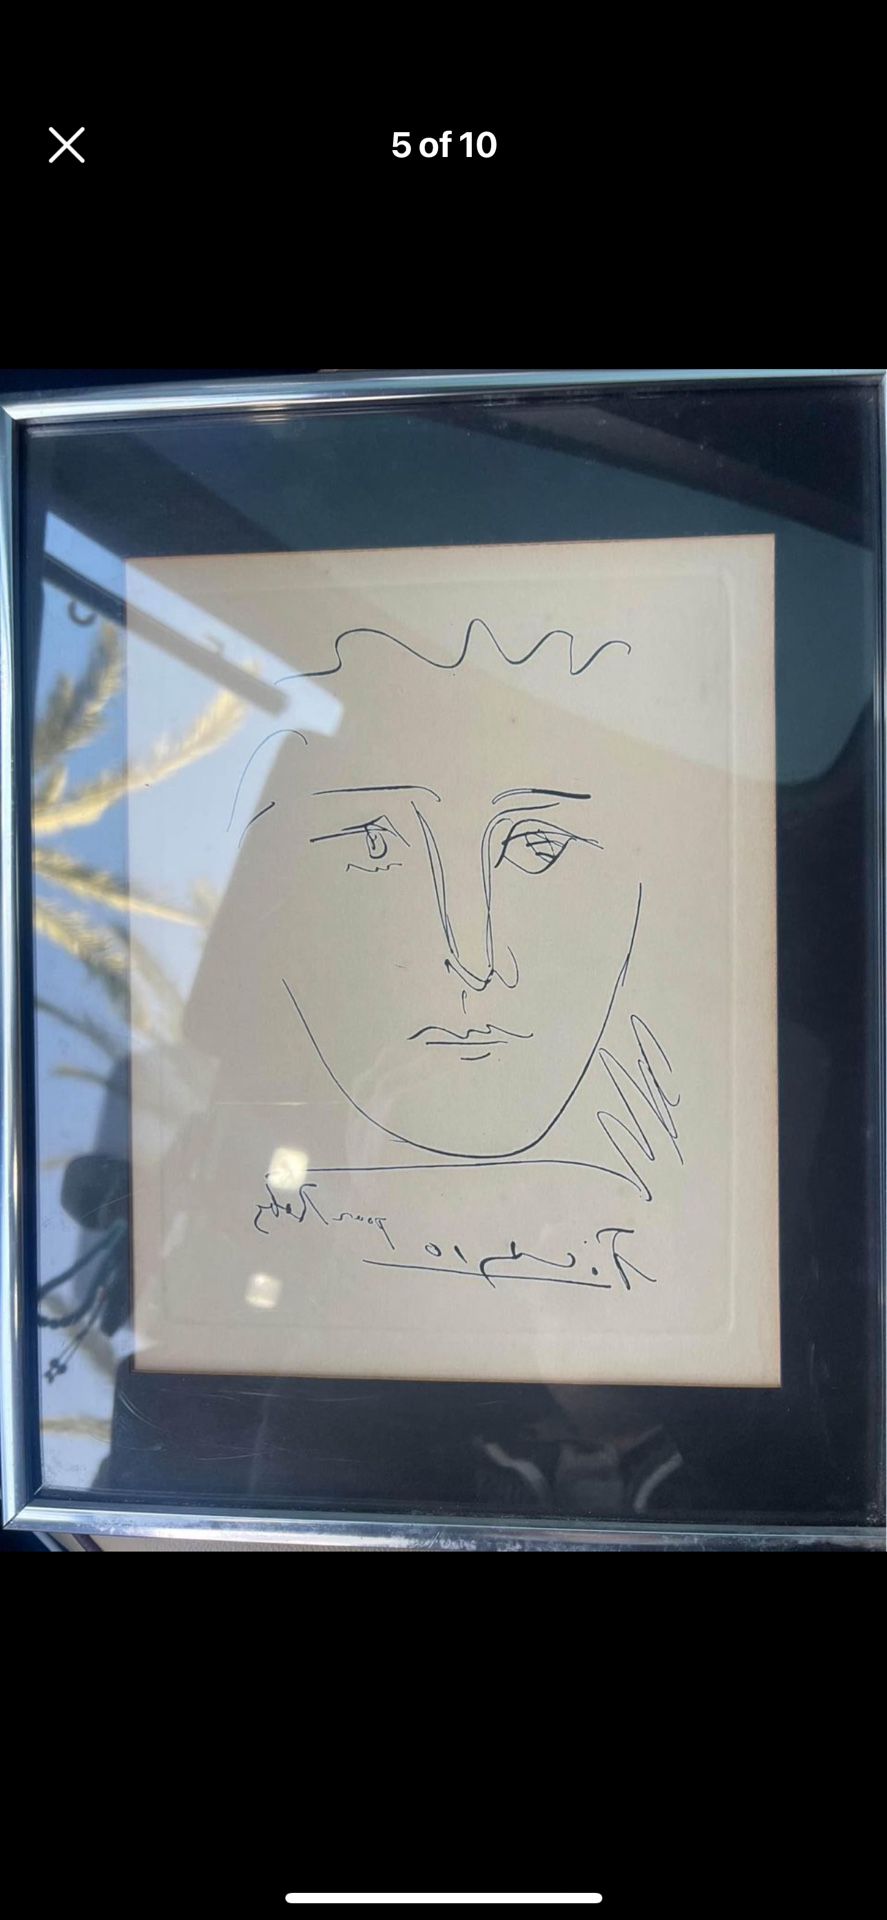 Pablo Picasso "Pour Robie" Signed Original Etching Print 1960 🖌️🎨 Vintage W/Certificate